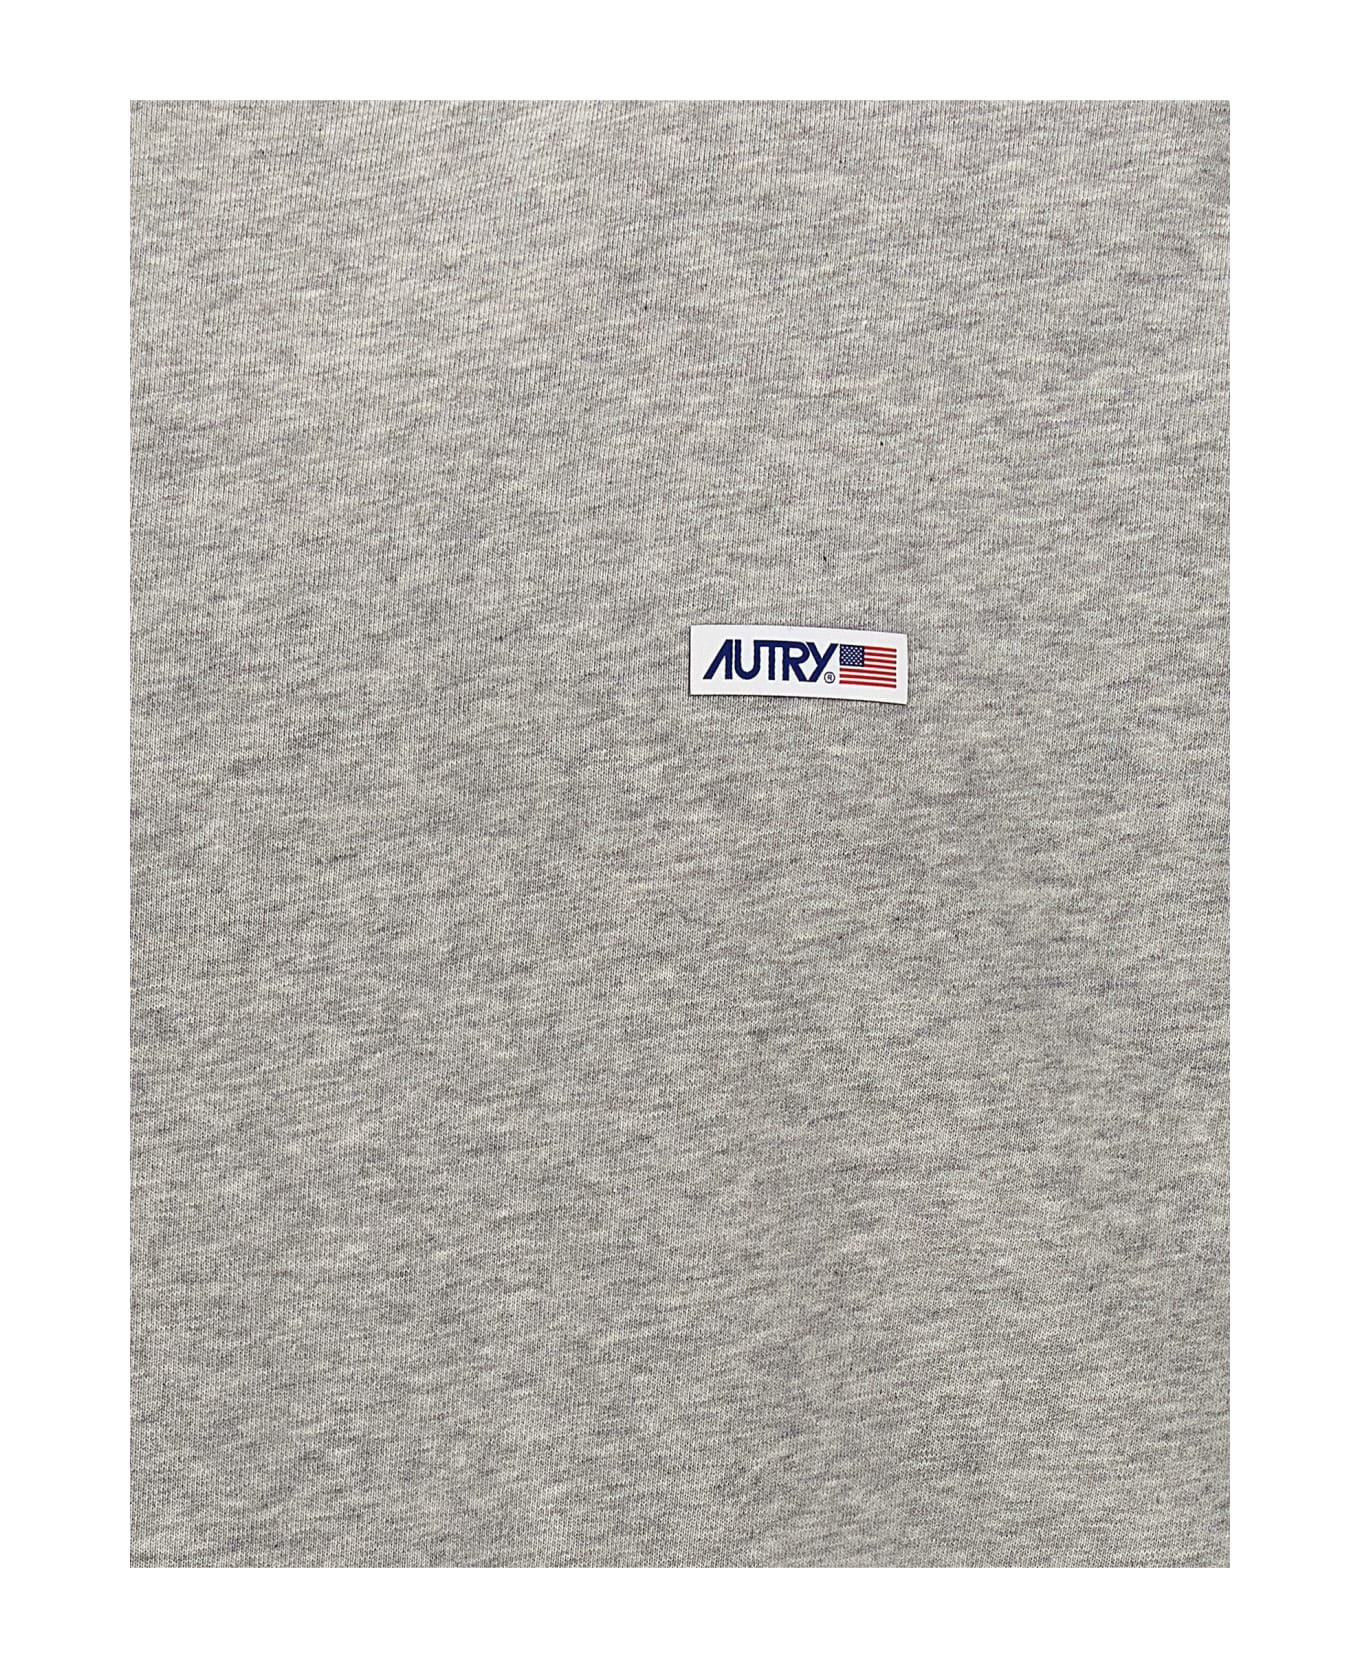 Autry Logo Sweatshirt - Gray フリース